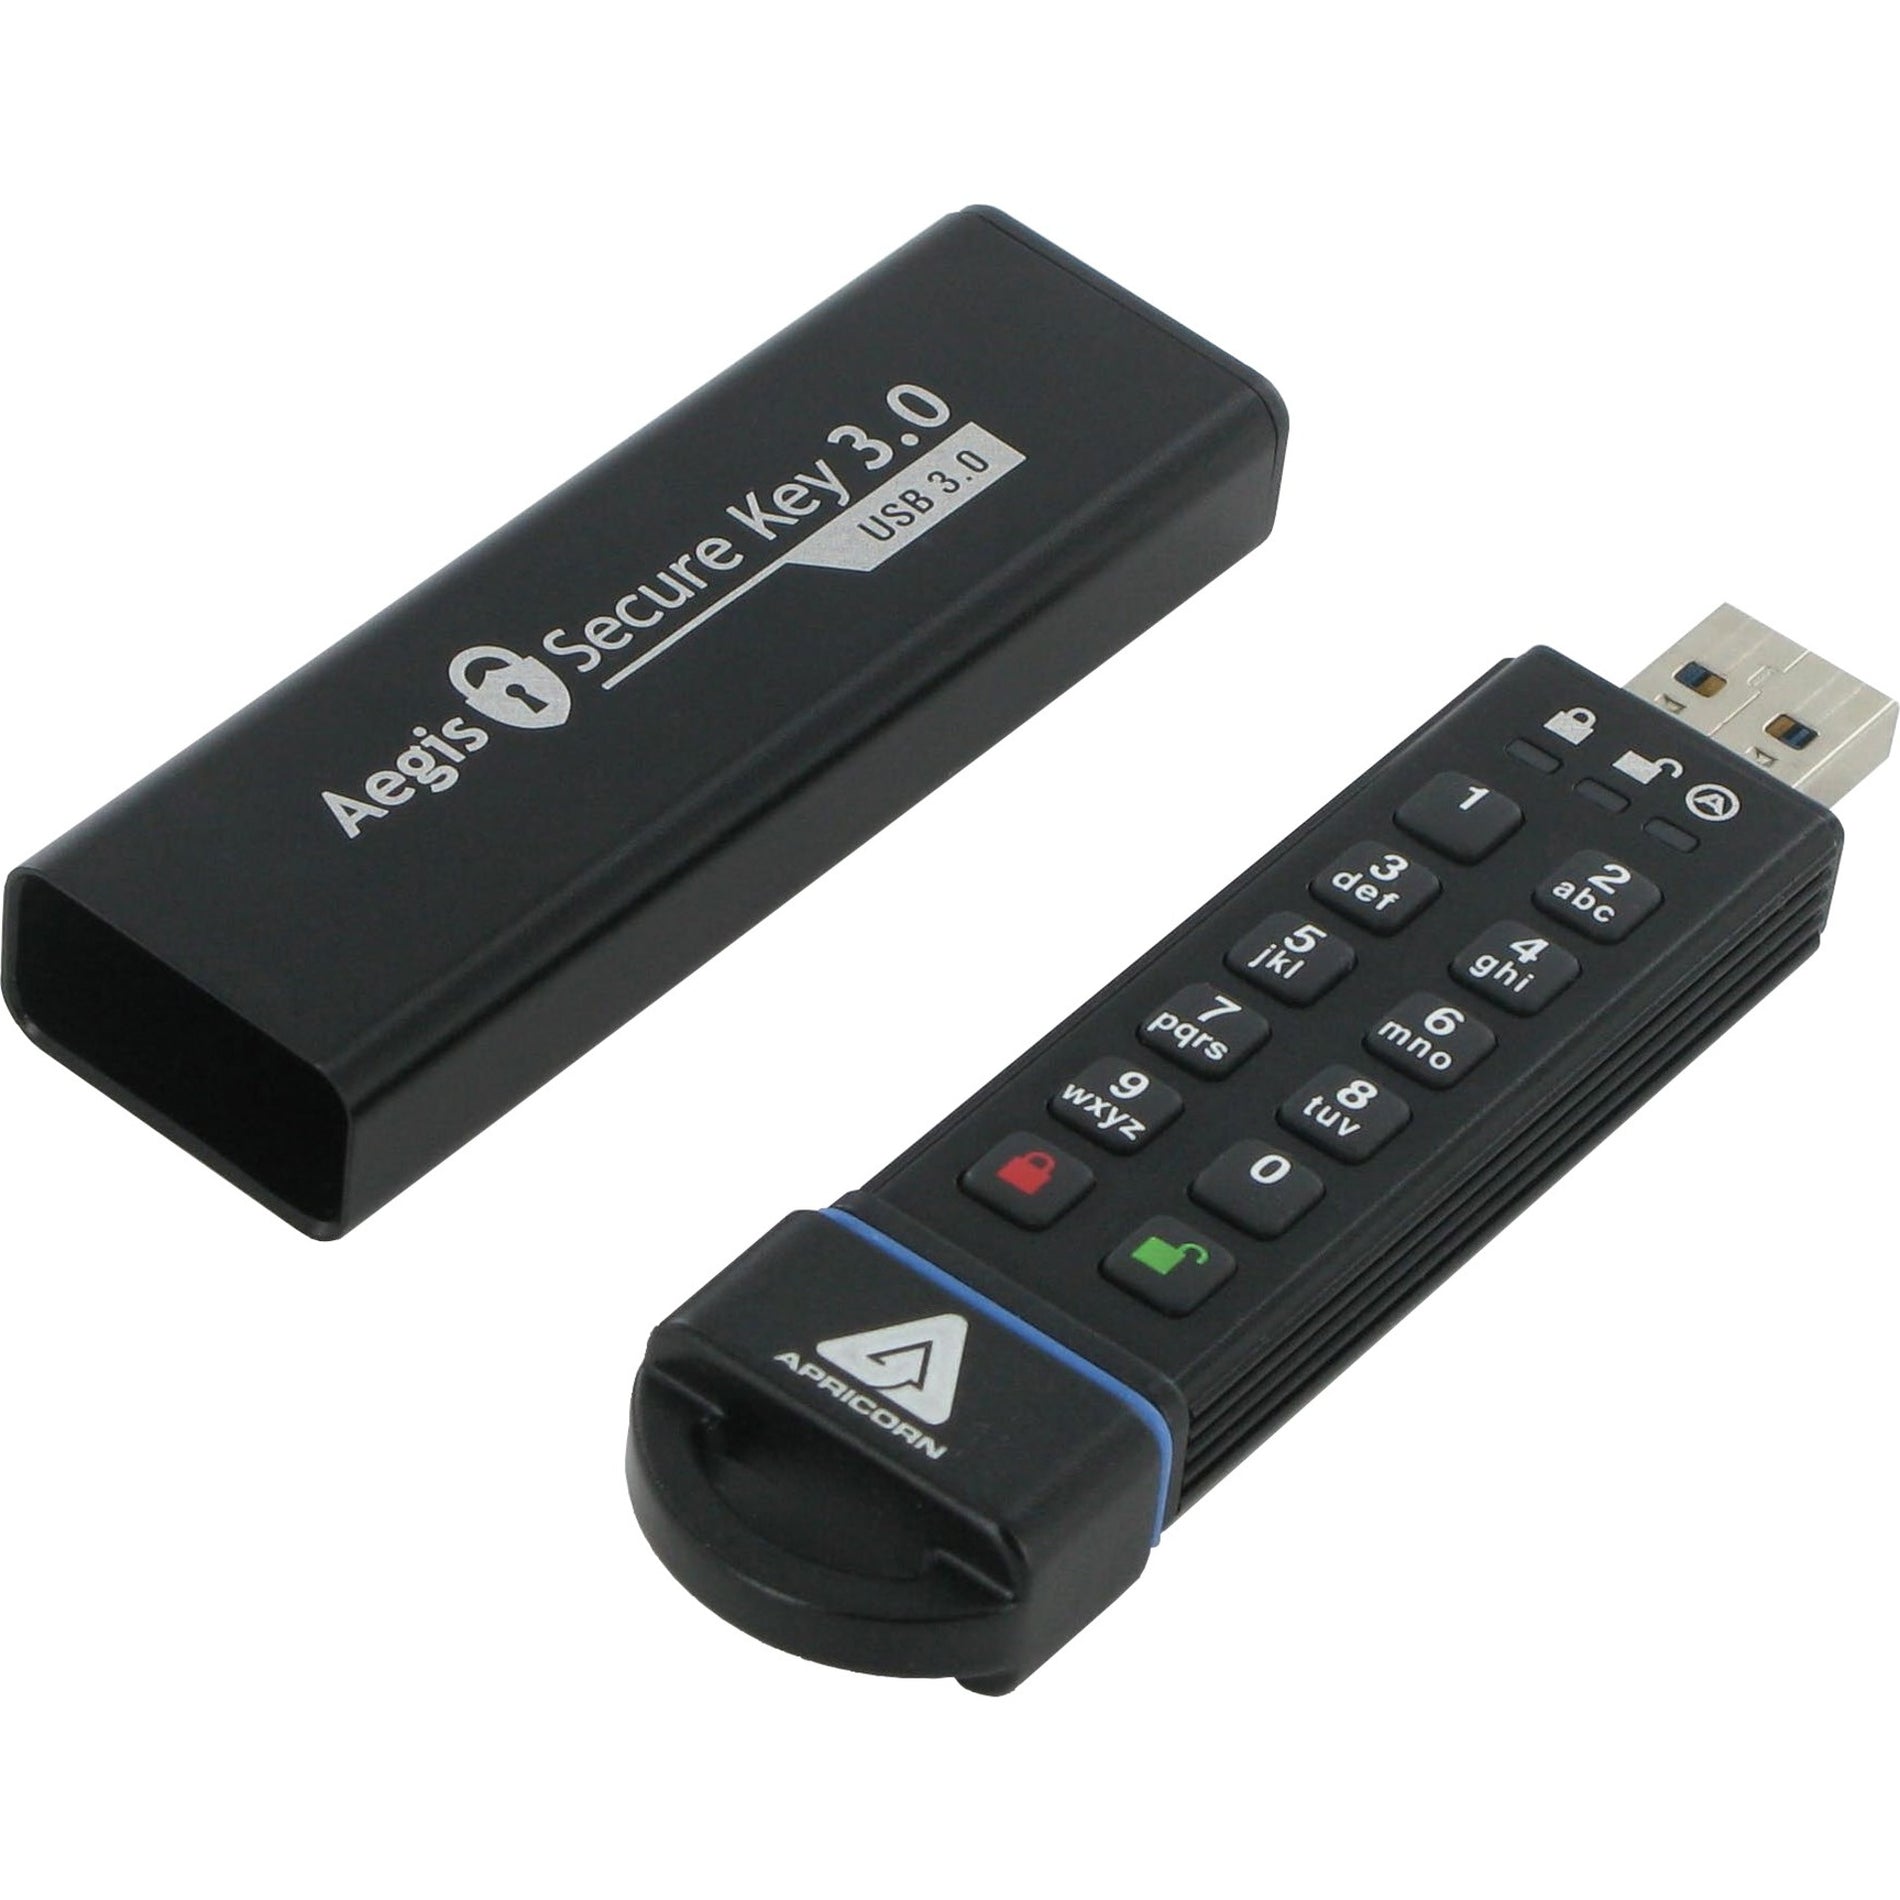 Apricorn ASK3-480GB Aegis Secure Key 3.0 USB 3.0 Flash Drive, 480GB Storage, 256-bit AES Encryption